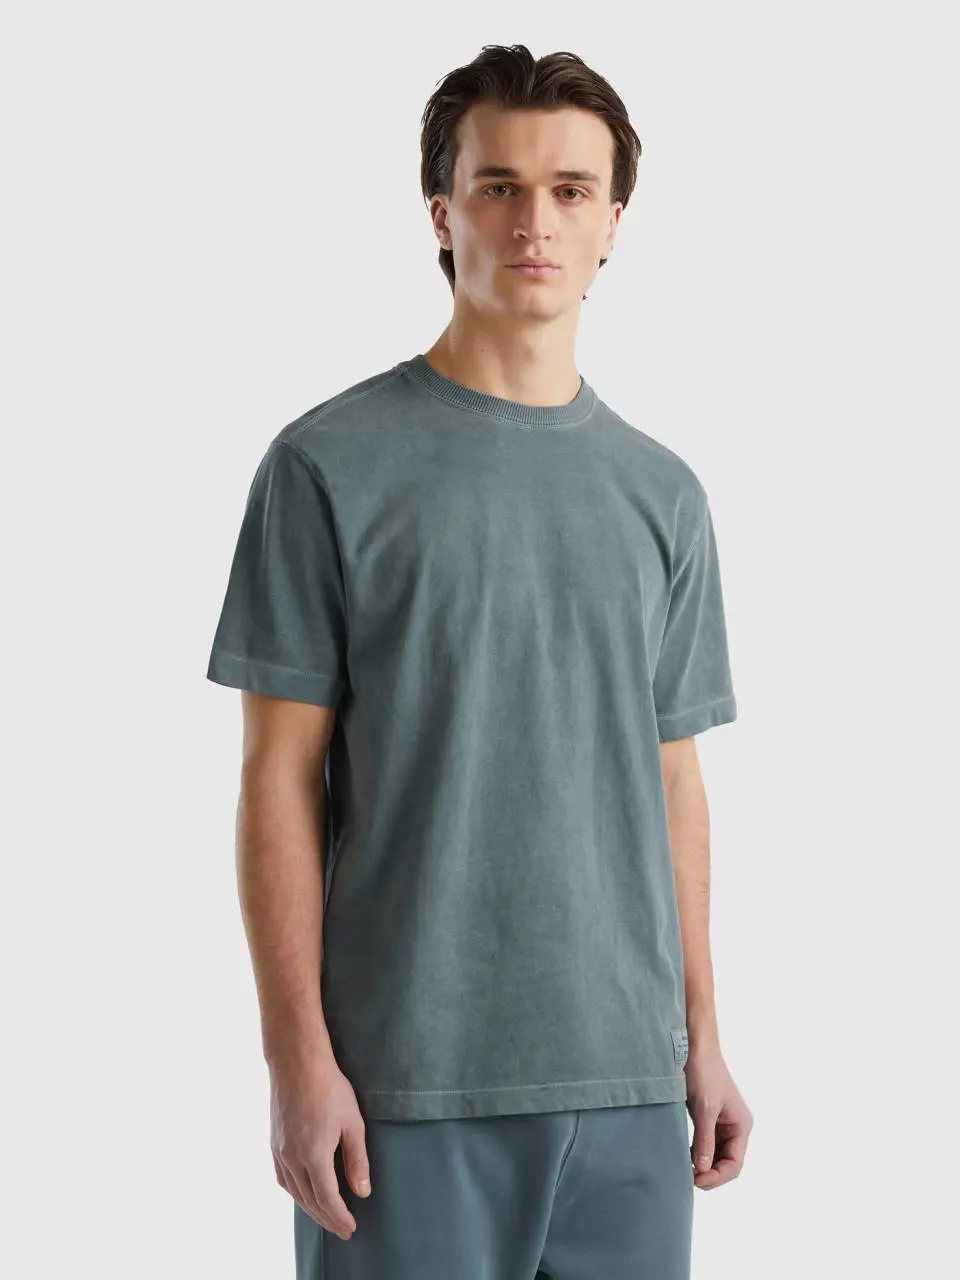 Benetton 100% organic cotton crew neck t-shirt. 1